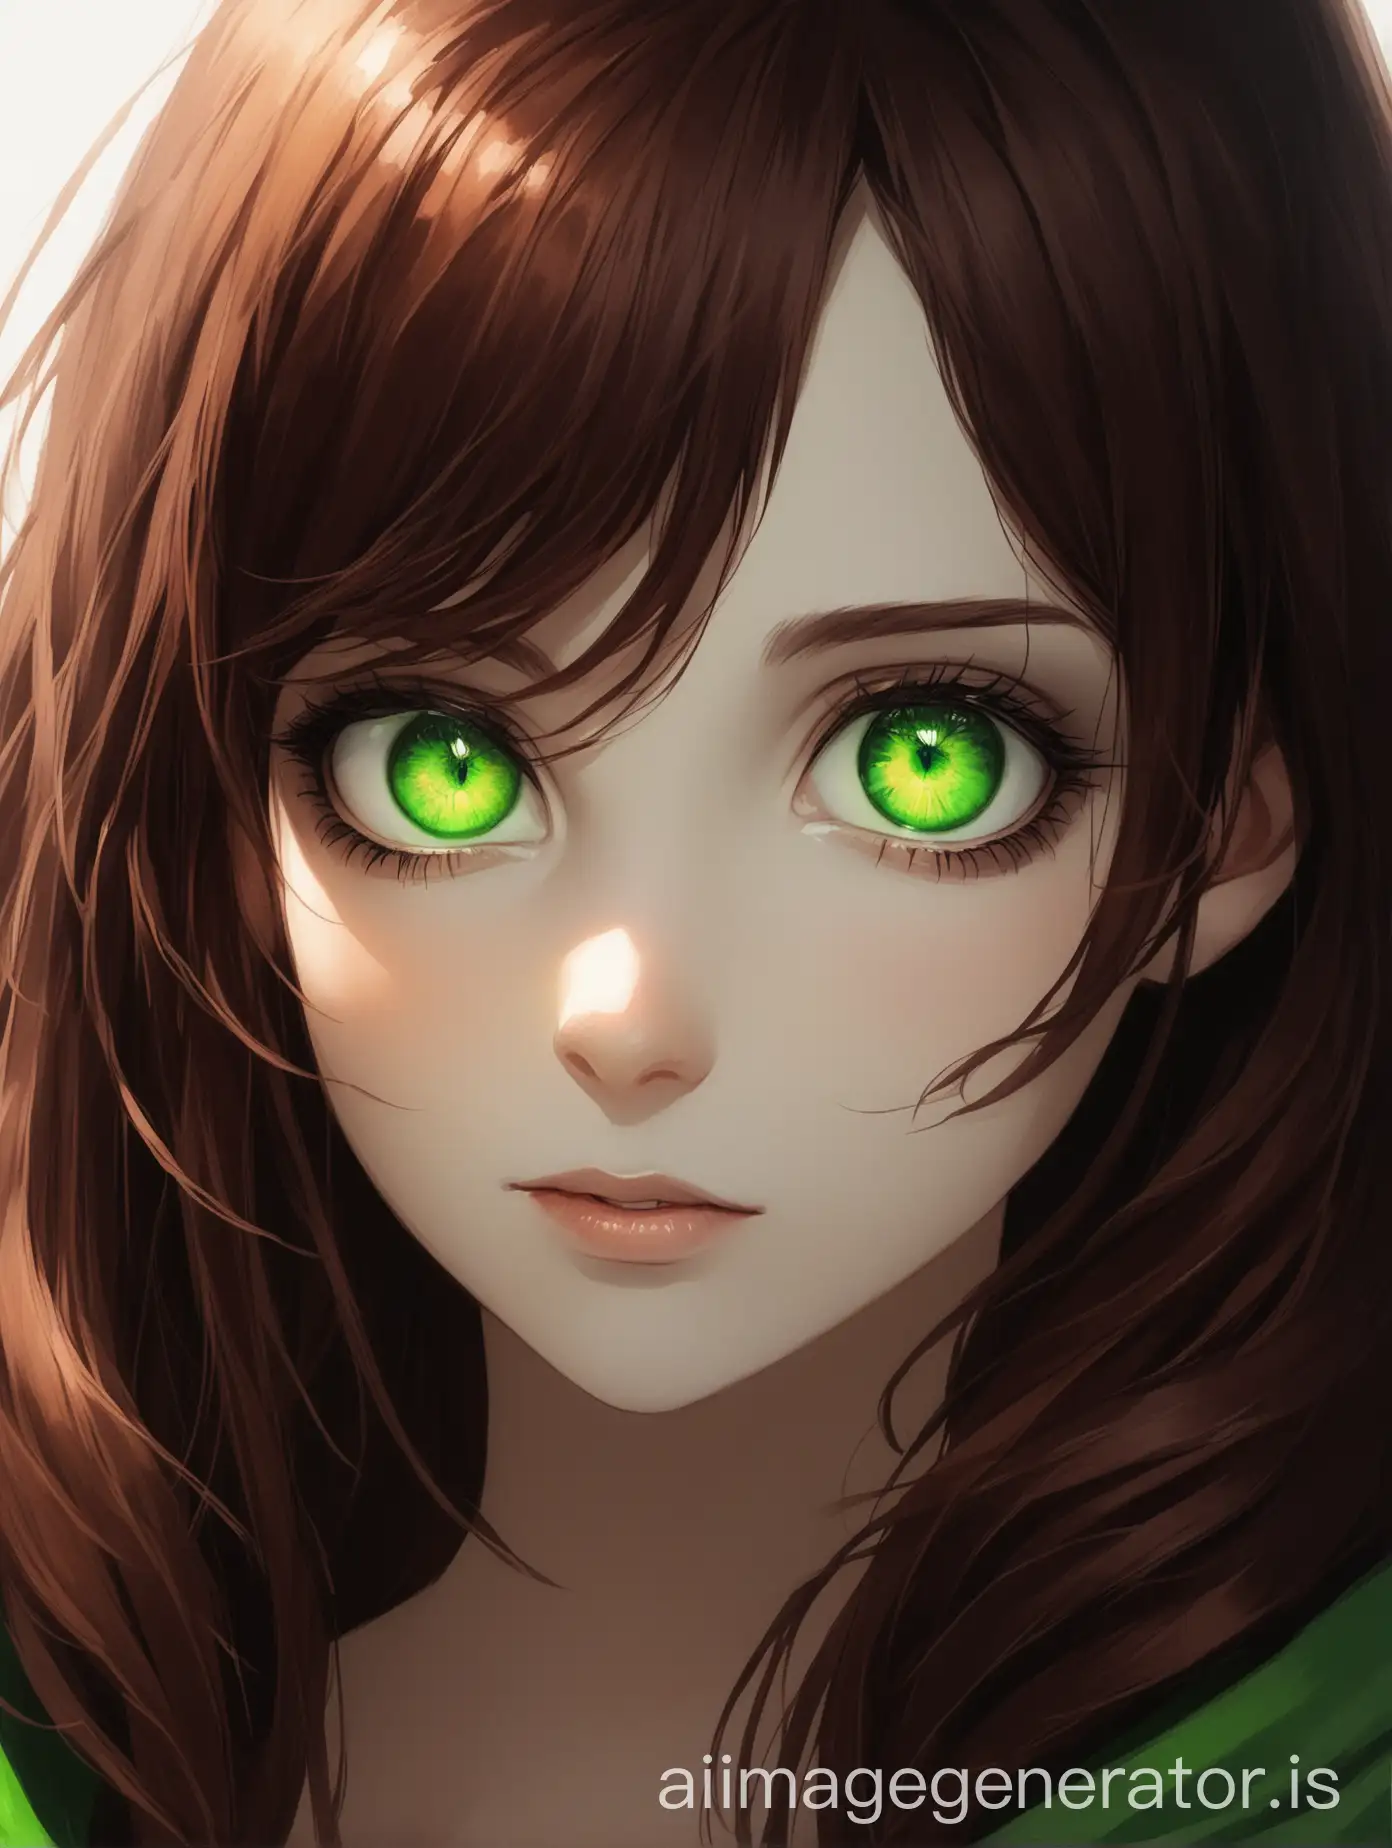 a girl with dark auburn hair and bright green eyes